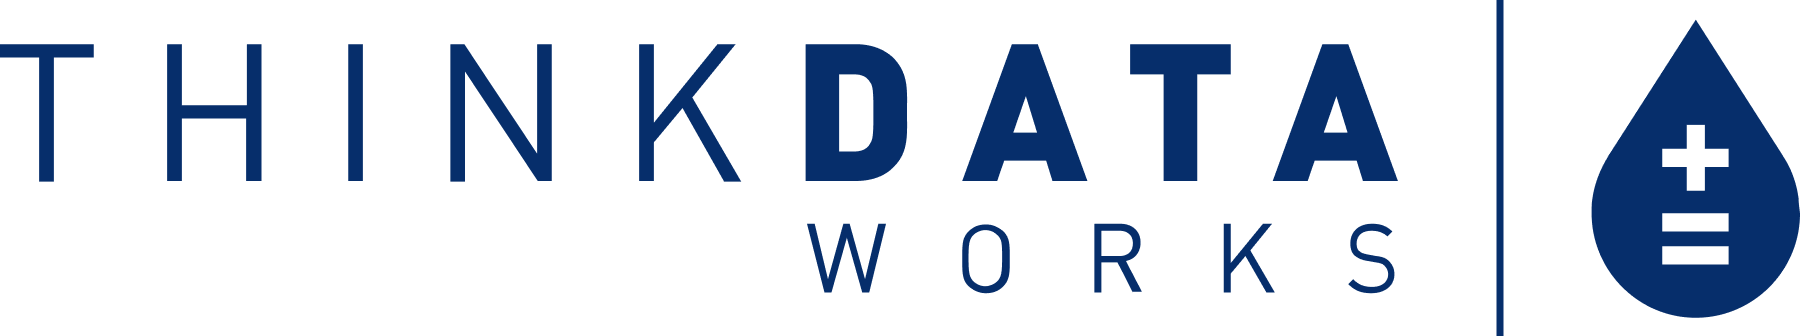 ThinkData Works logo in navy on transparent background